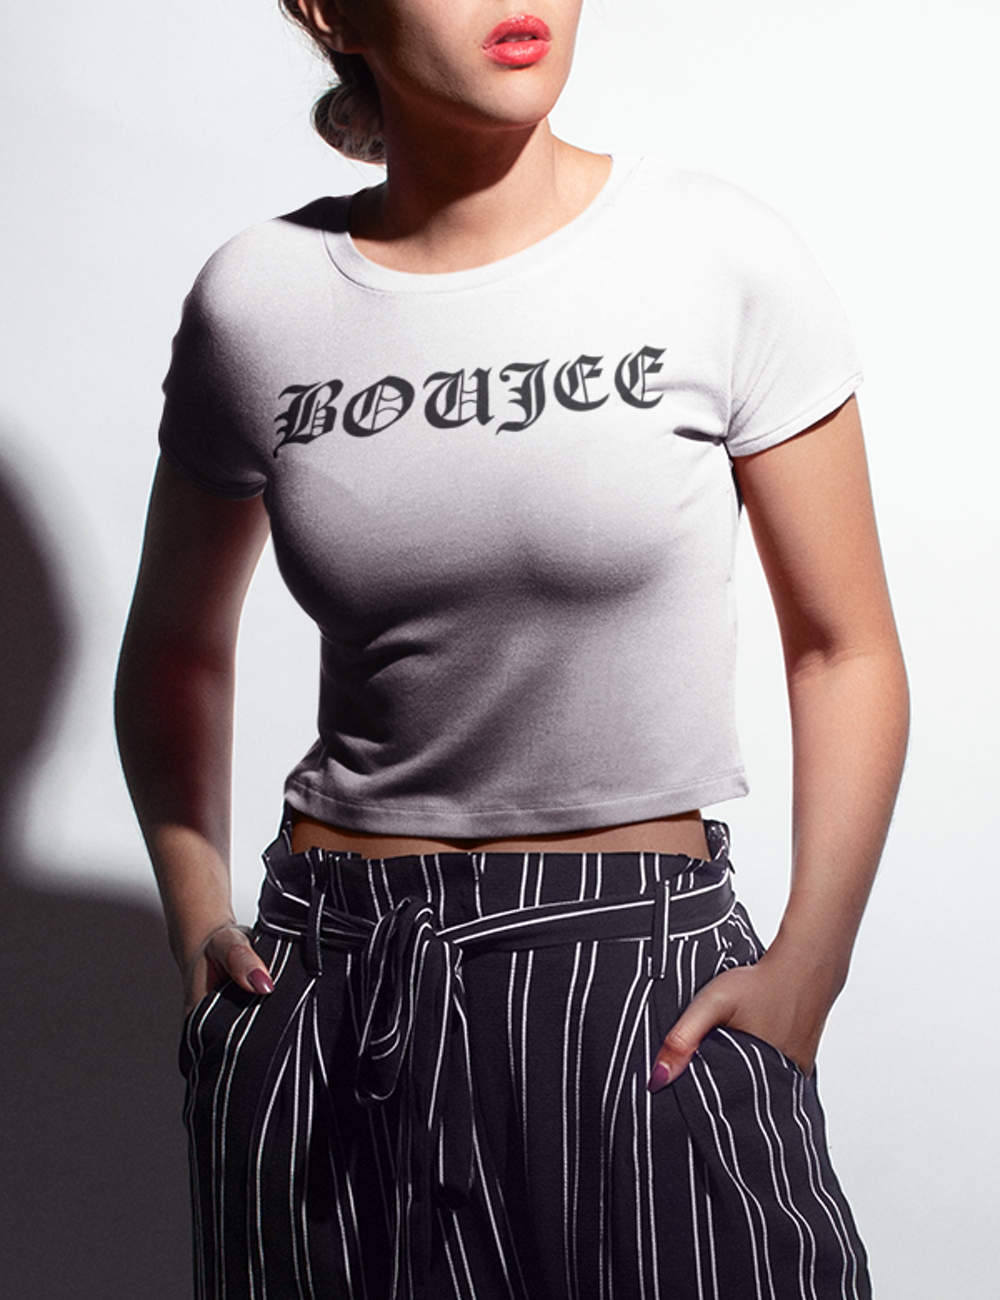 Boujee | Crop Top T-Shirt OniTakai